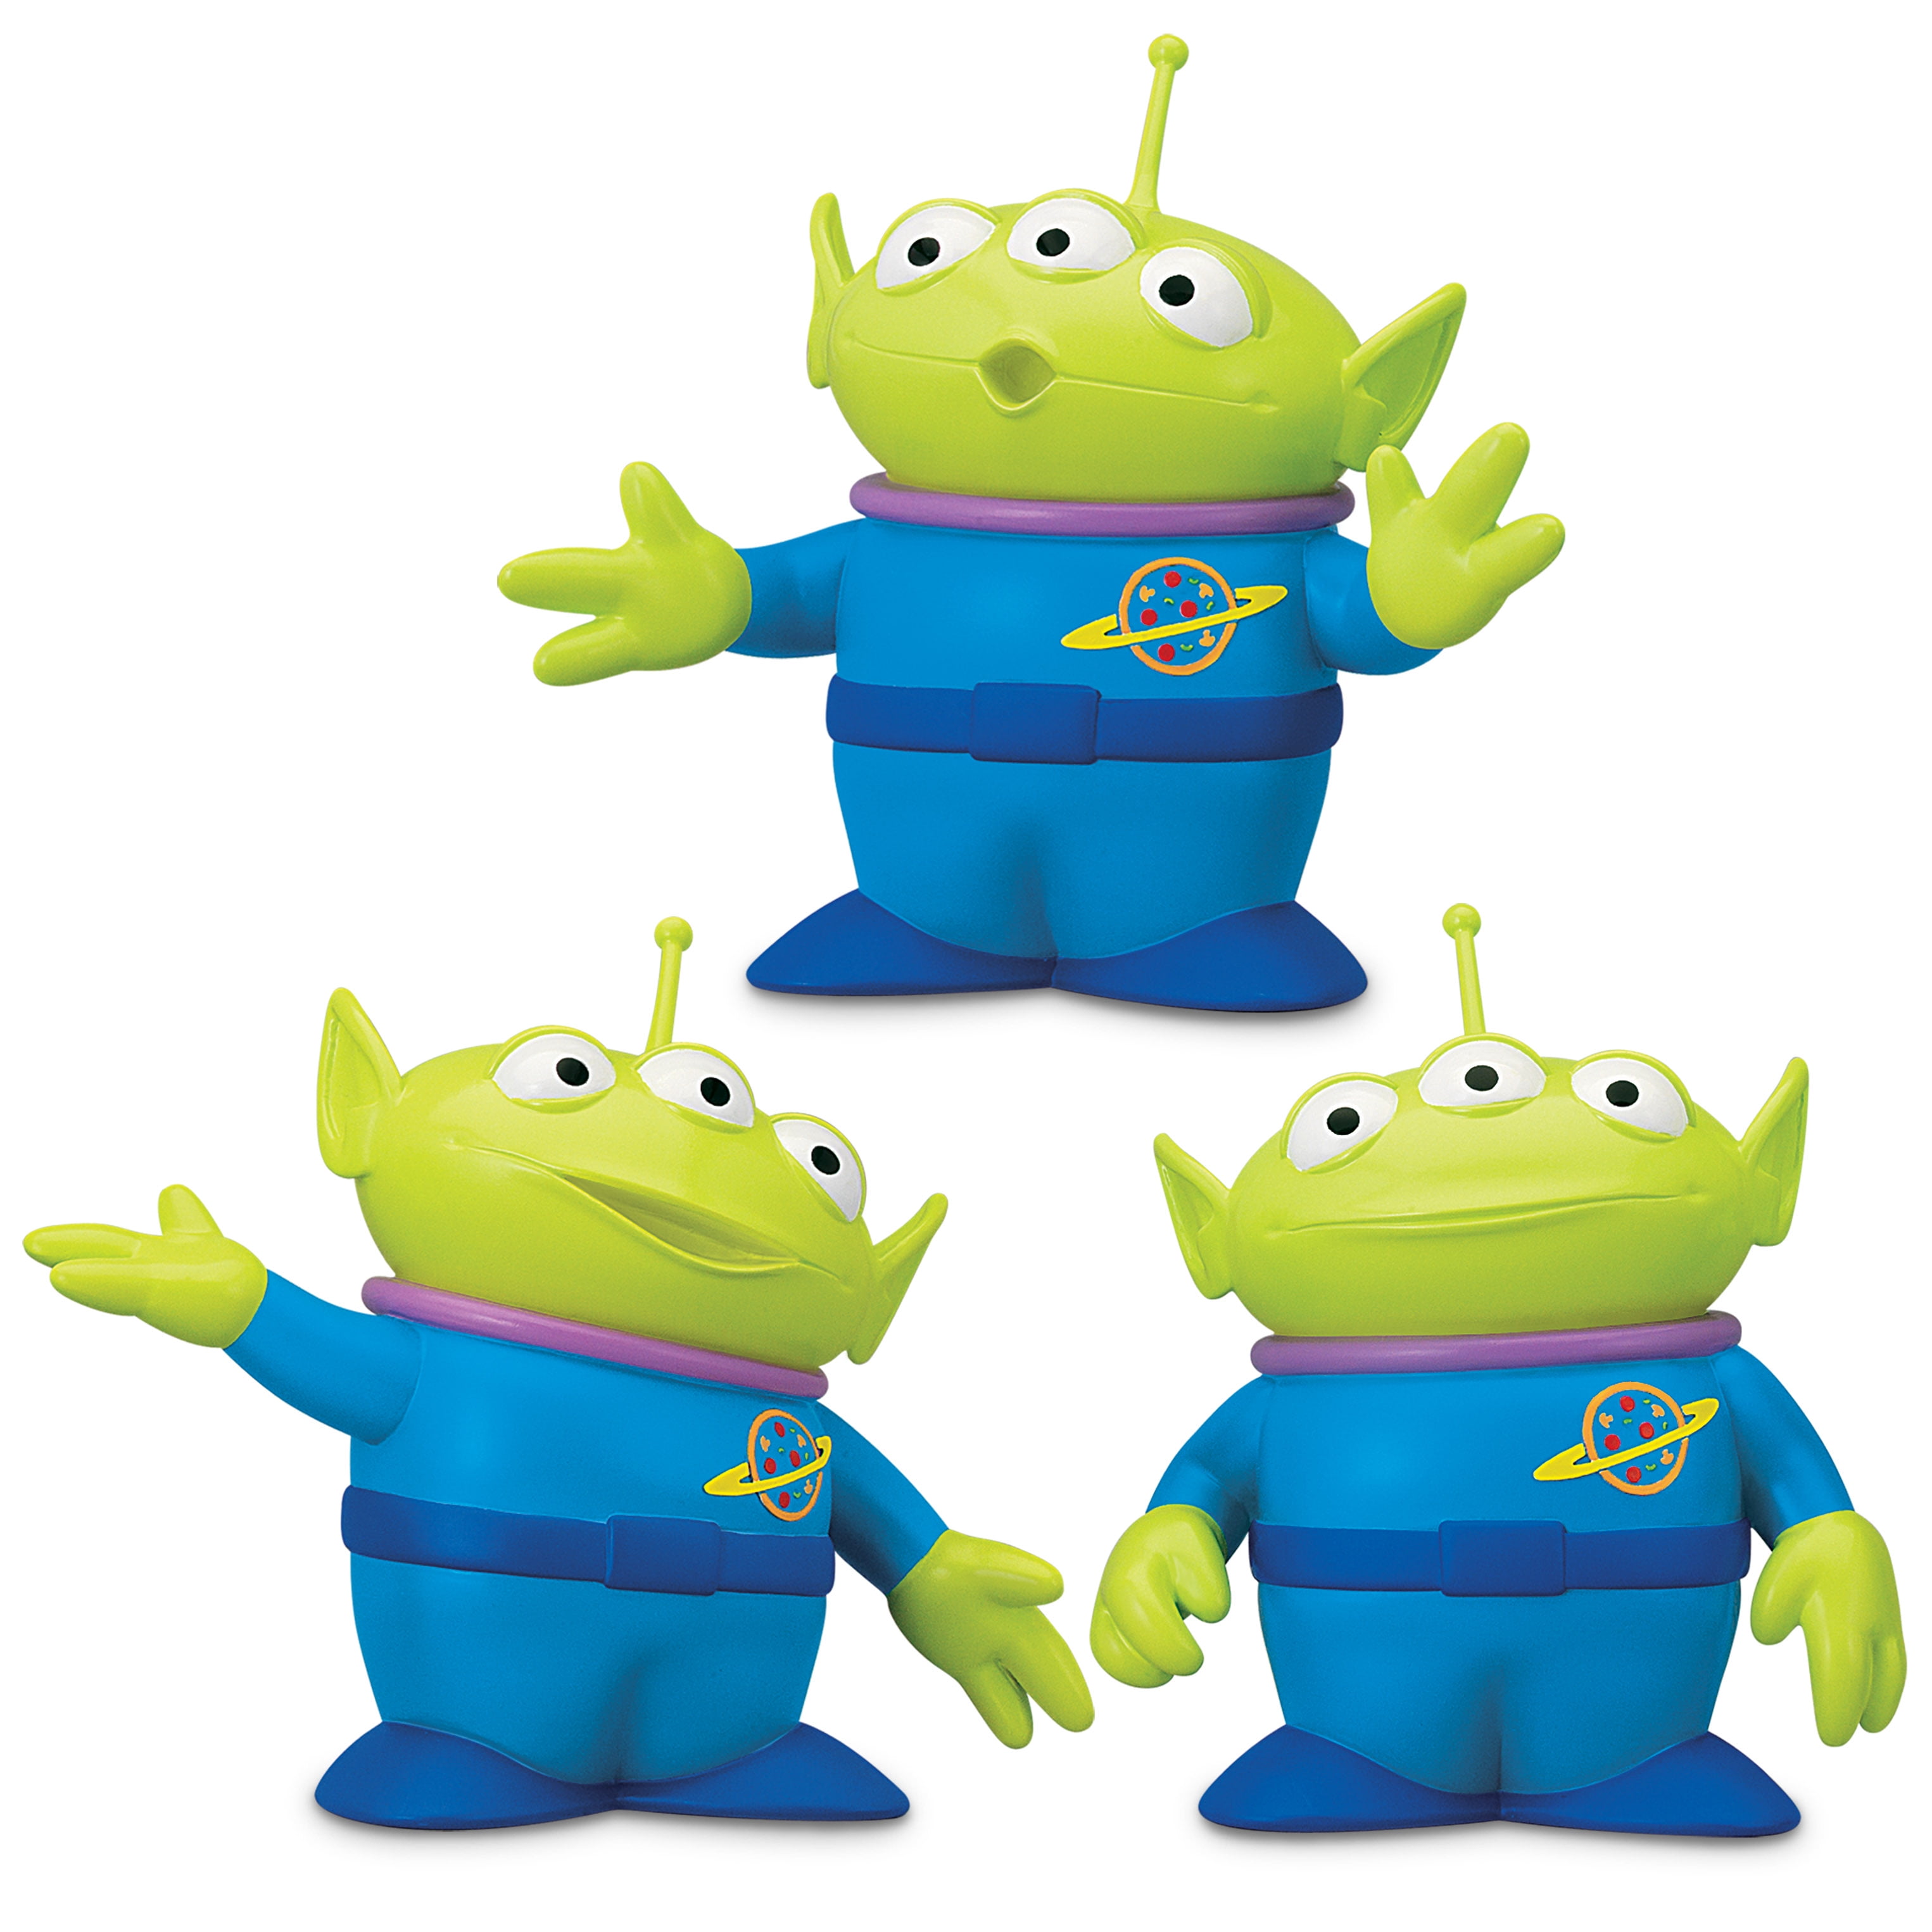 Disney Pixar Toy Story Space Alien toy story martians costume. 